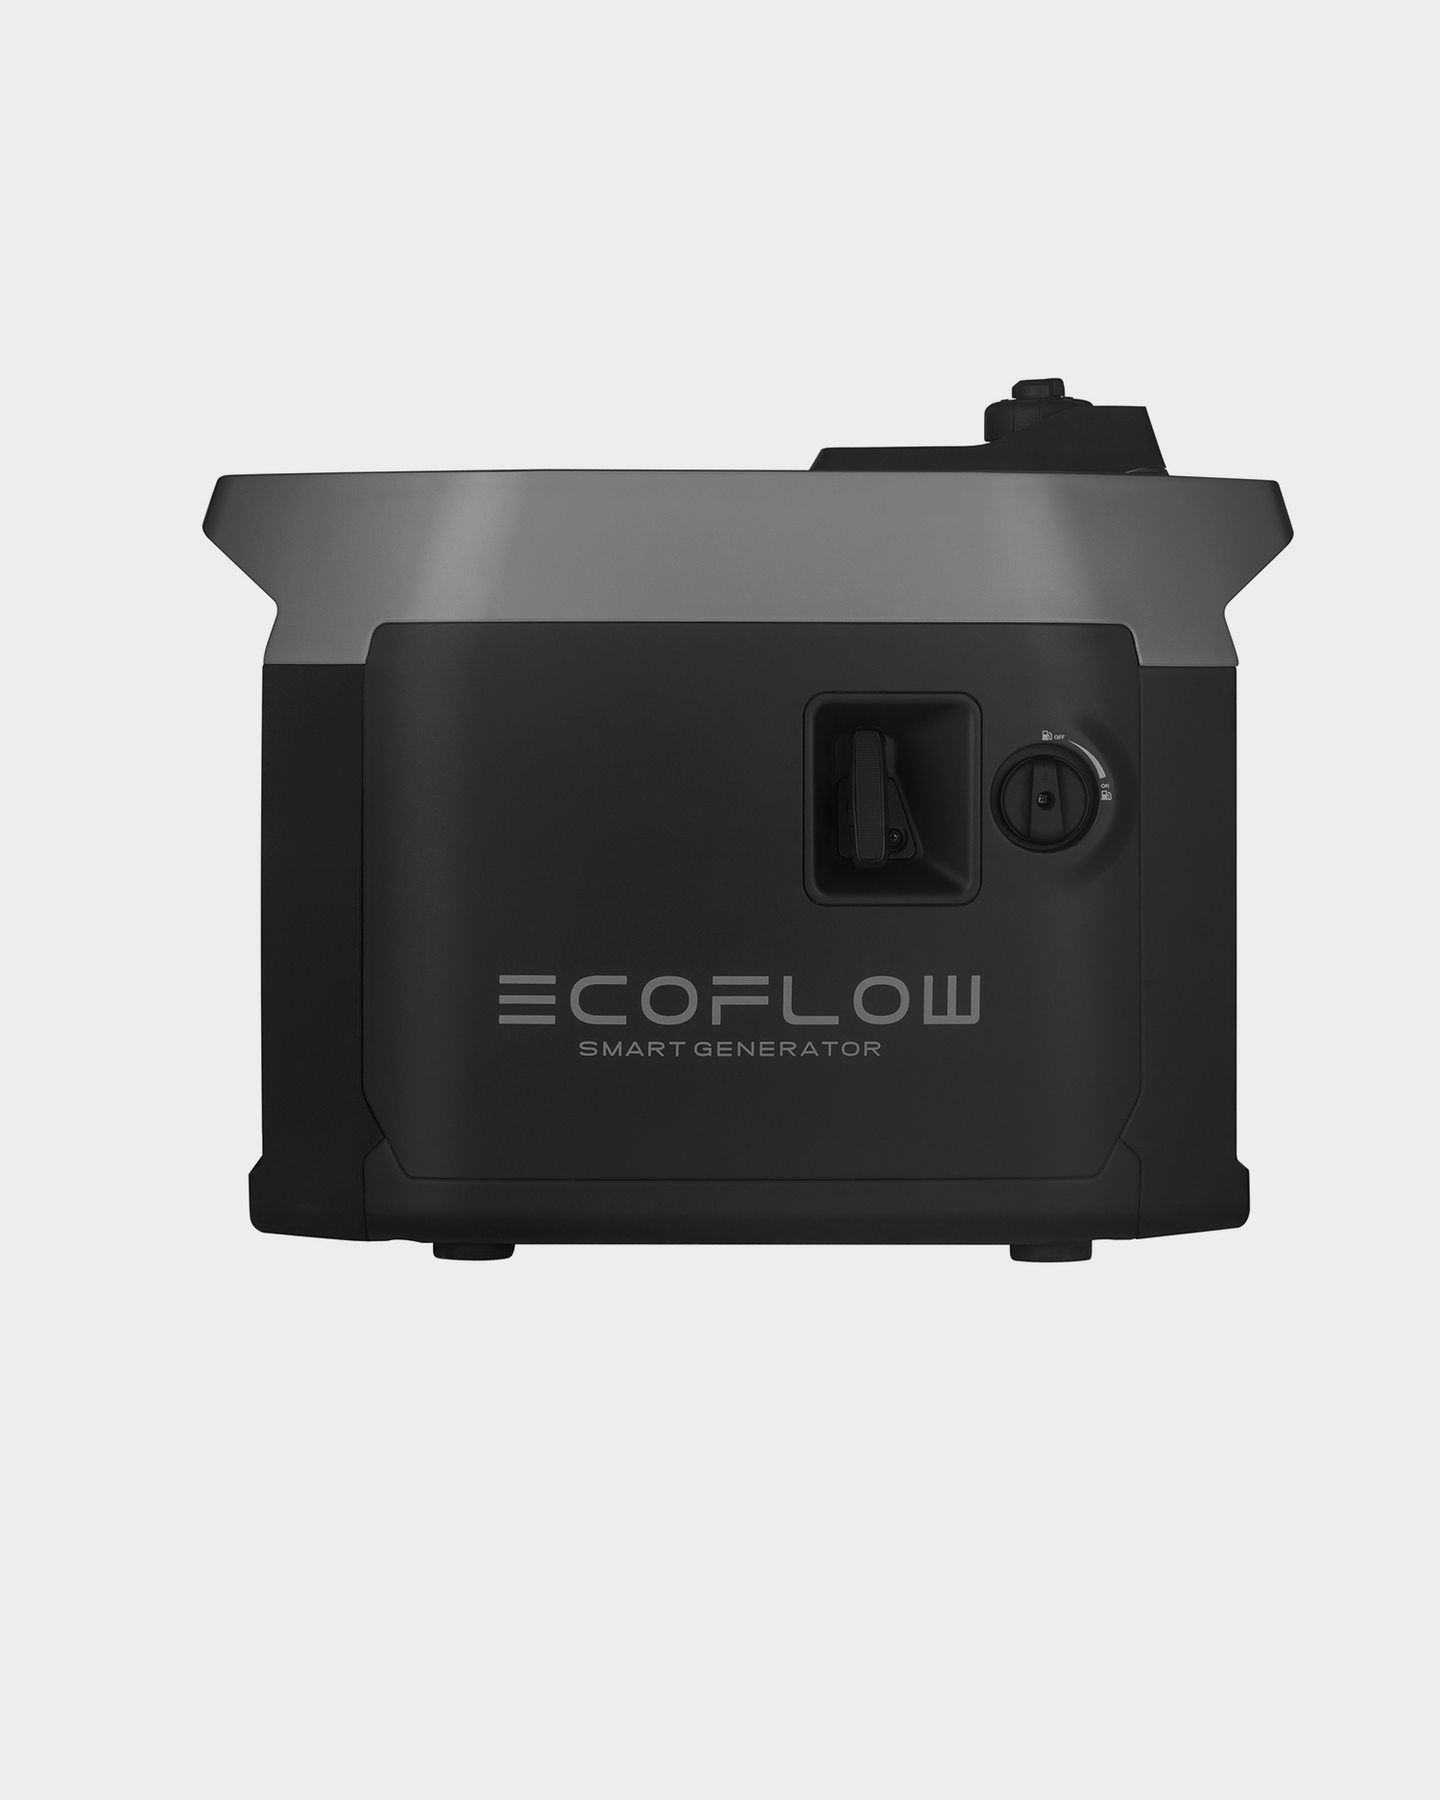 Ecoflow Smart Generator